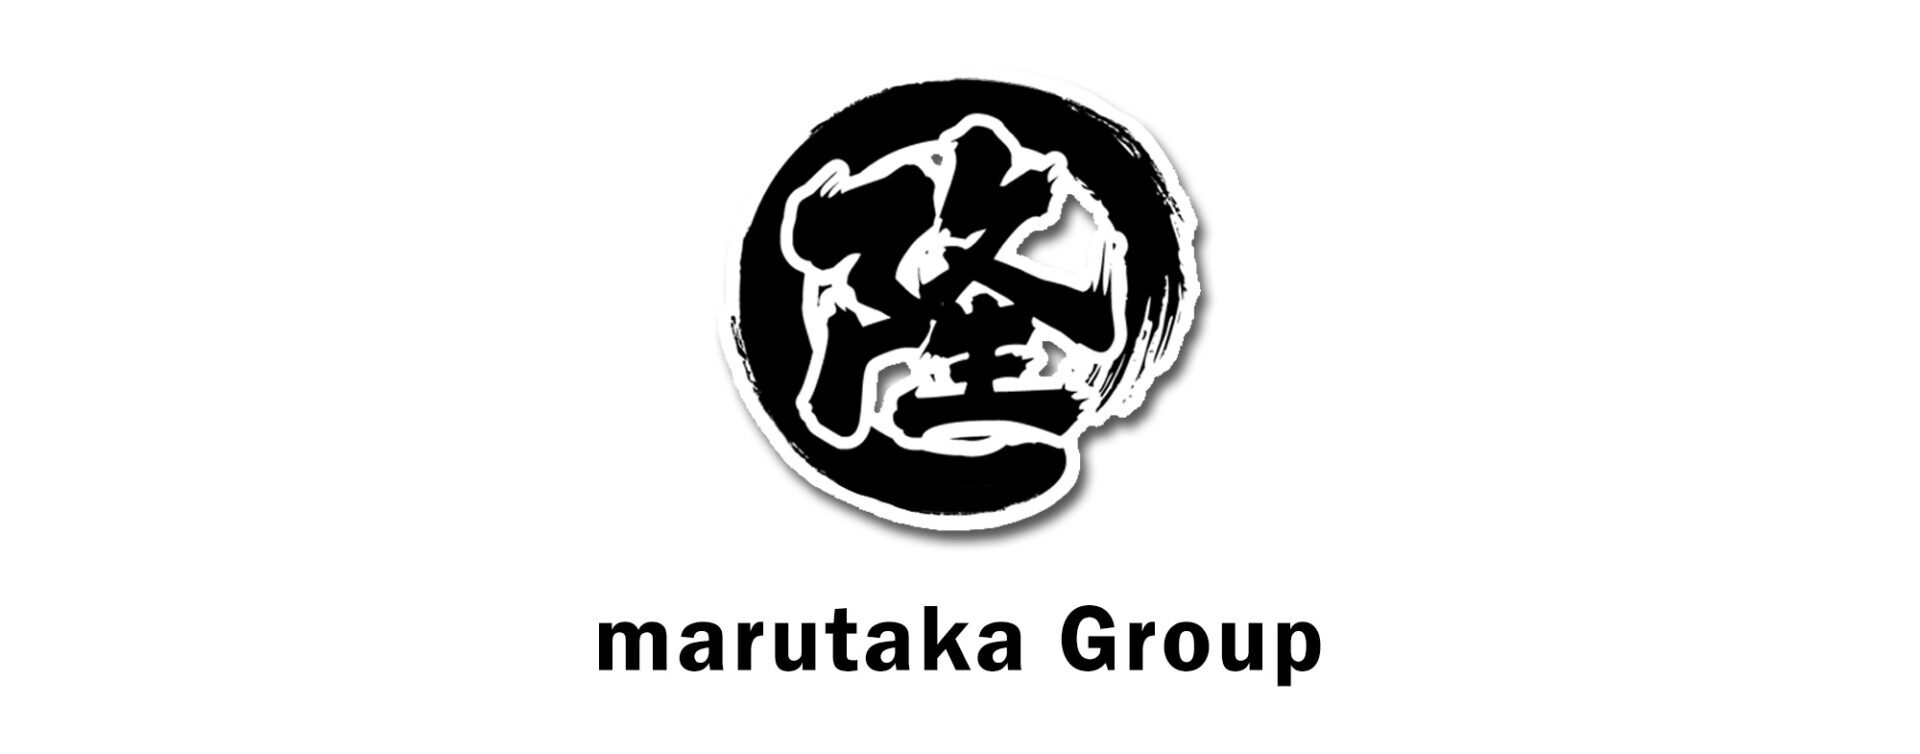 marutaka Group